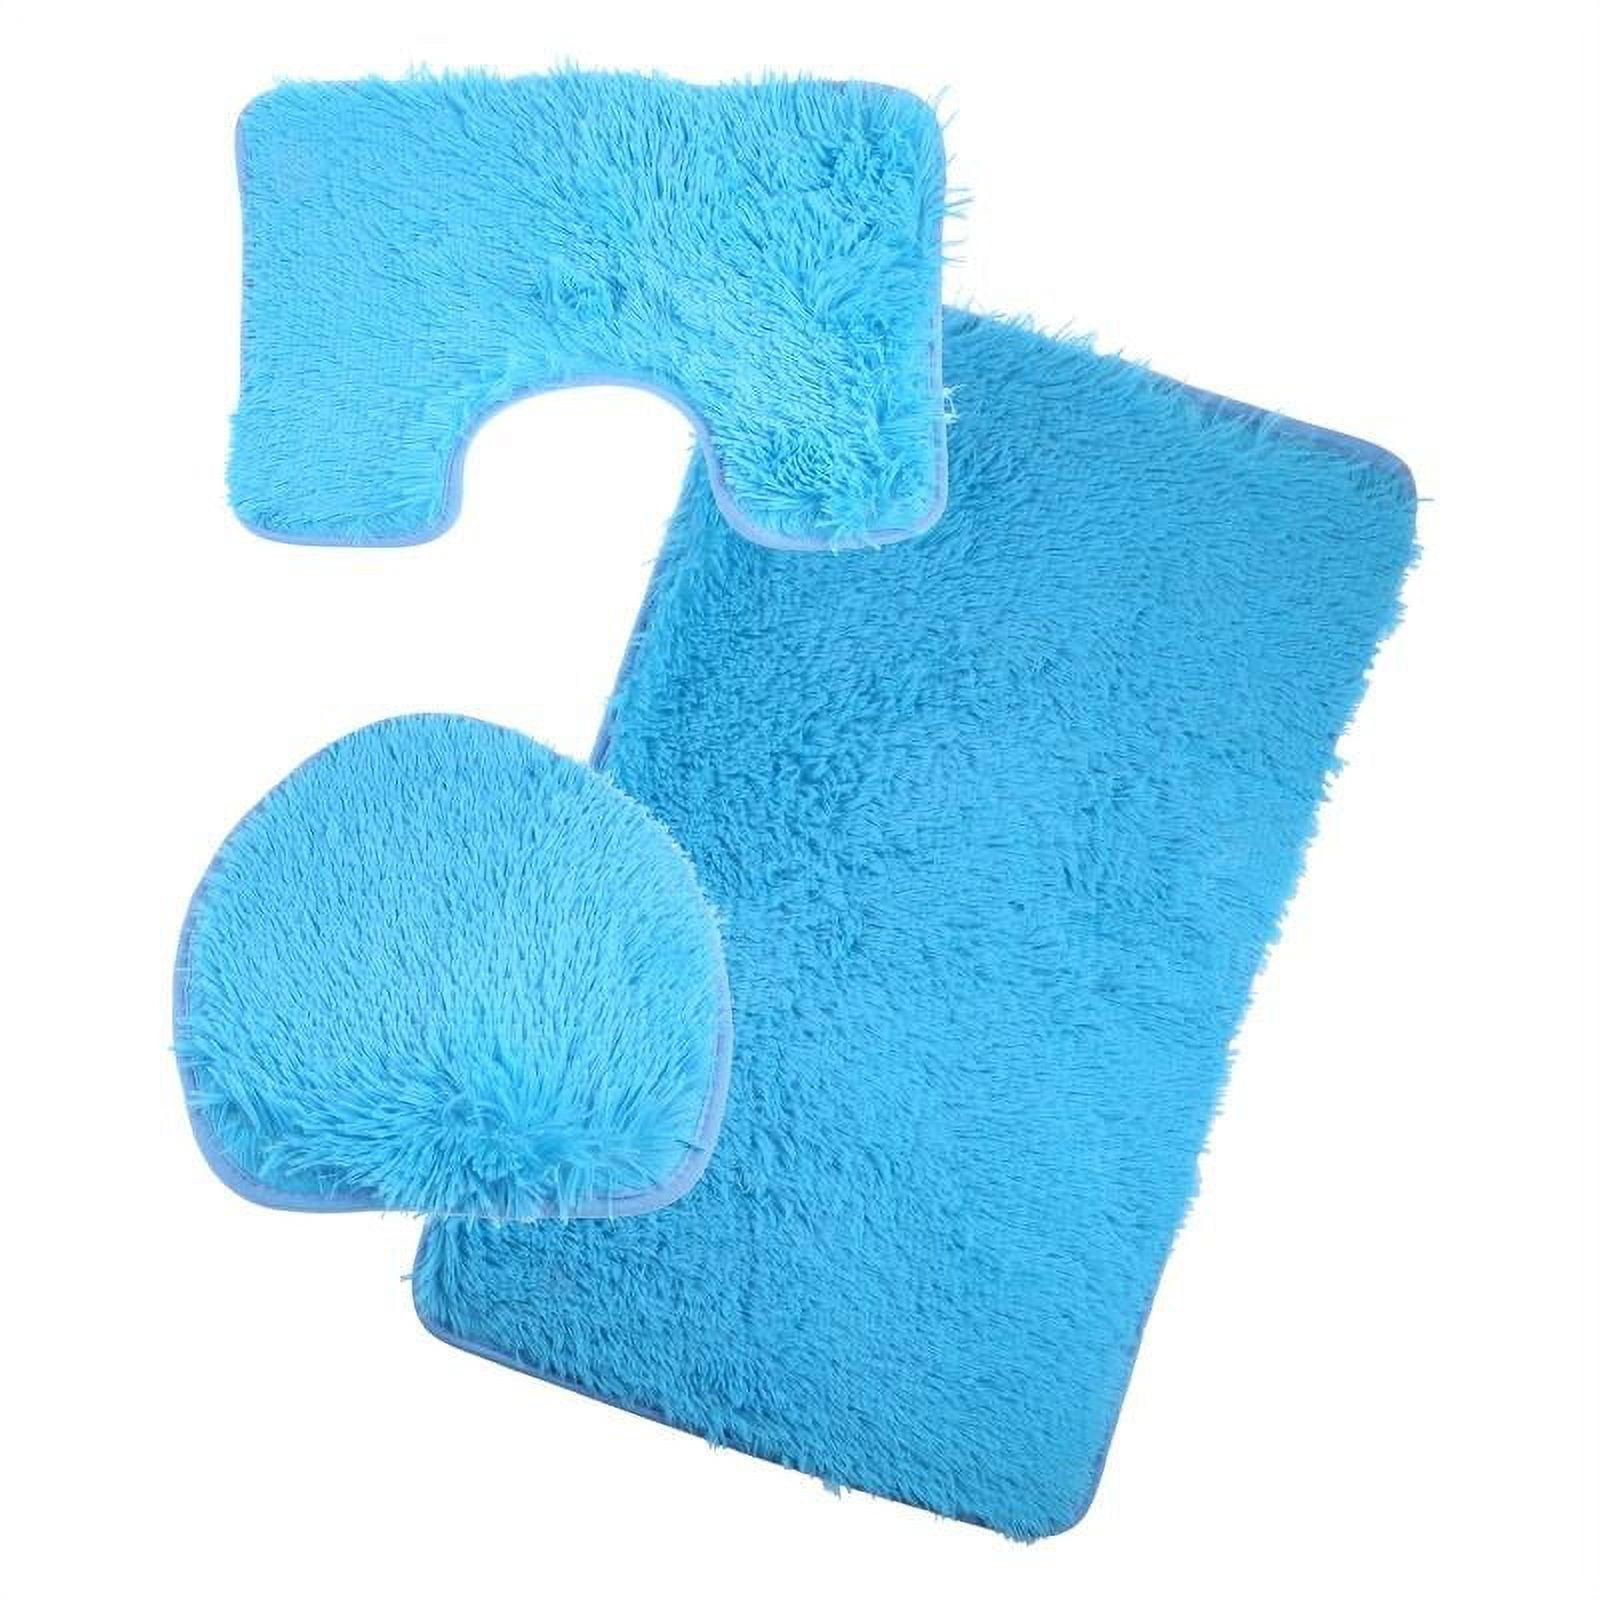 3 Piece Rock Light Blue Bathroom Set Rugs Old Stone Desing Embossed  Ultrasoft Anti Slip Washable Includes : 1 Bath Math 19X 30 1 Contour Mat  19X 15 1 Lid Cover 19X